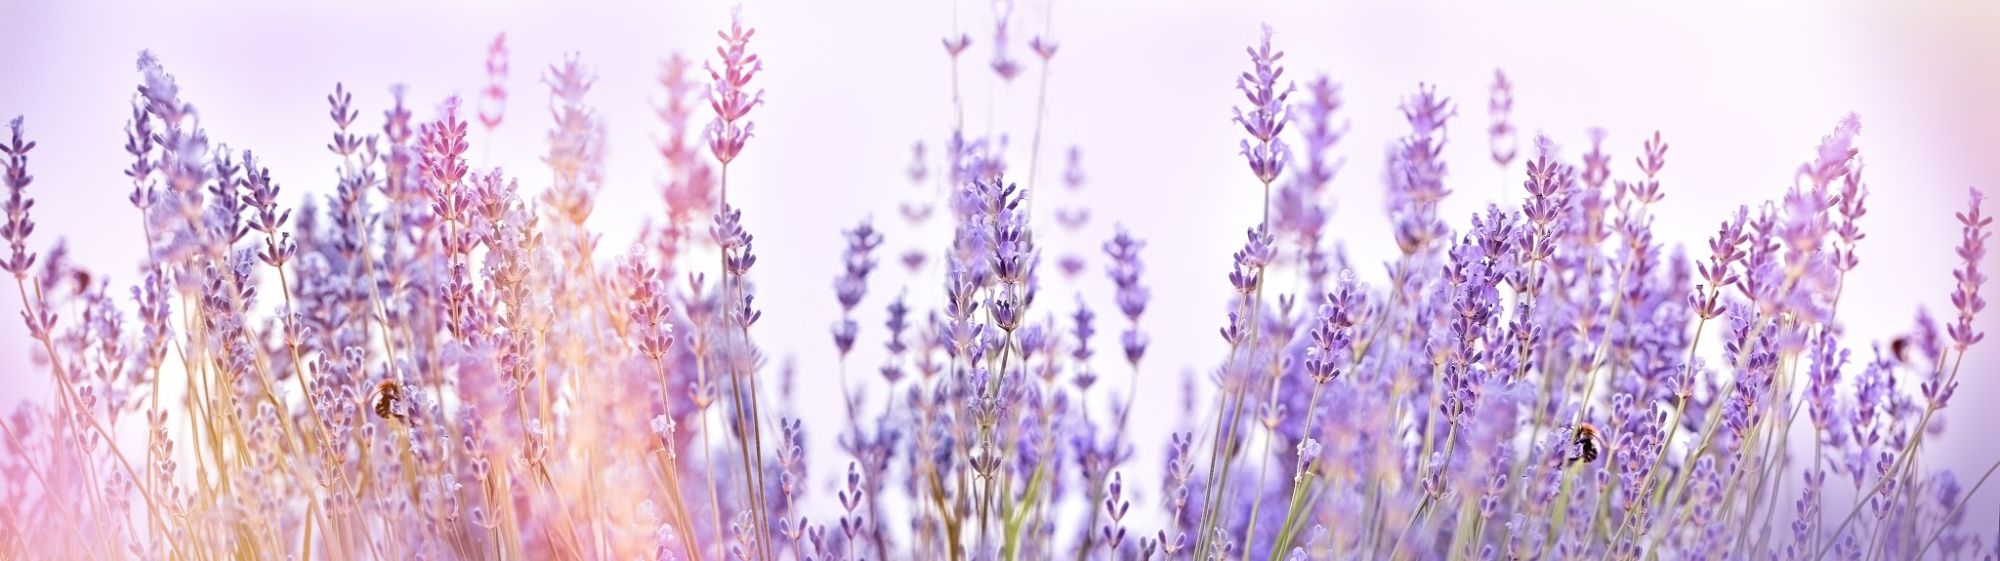 Lavender Field (1).jpg